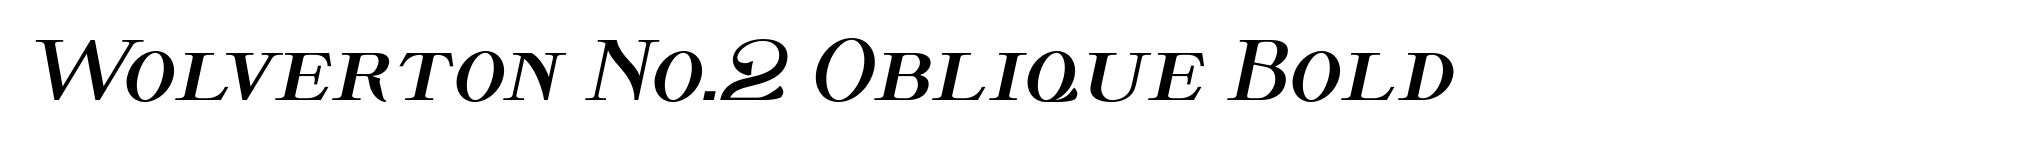 Wolverton No.2 Oblique Bold image